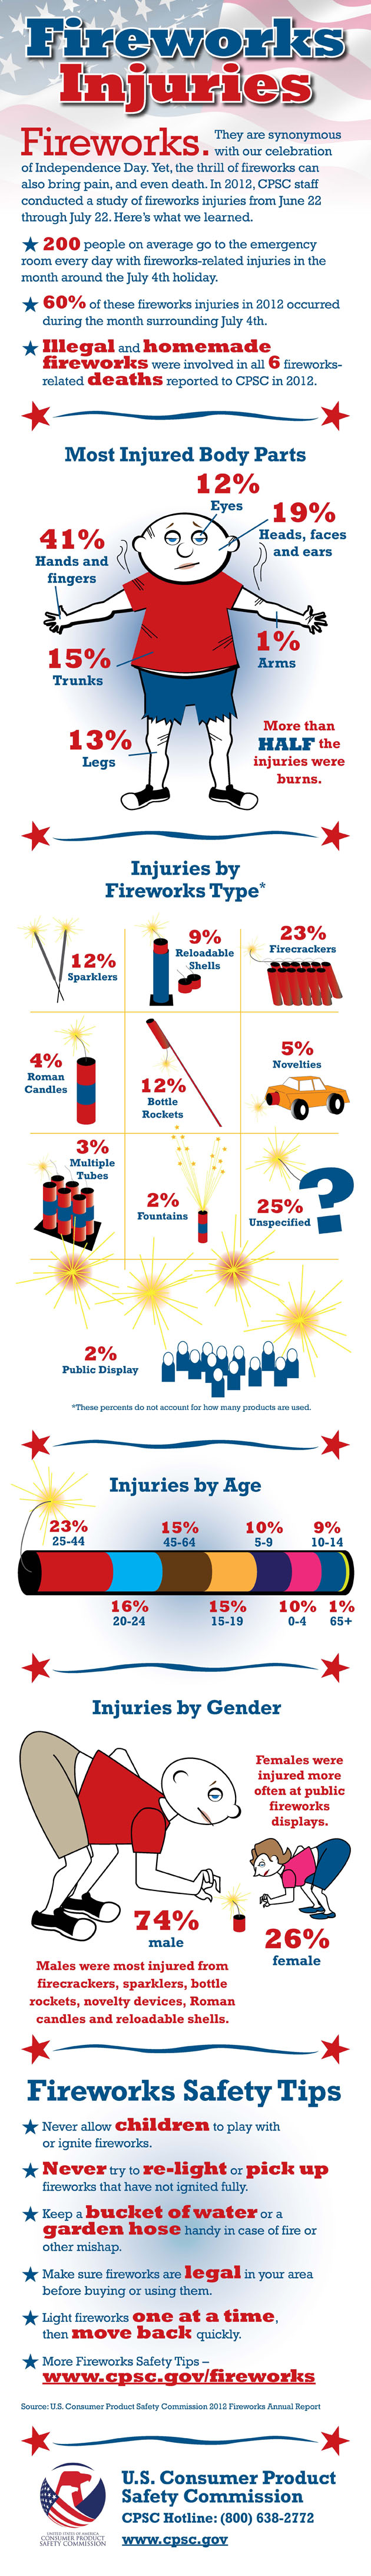 Fireworks-Infographic-2013_BLOG